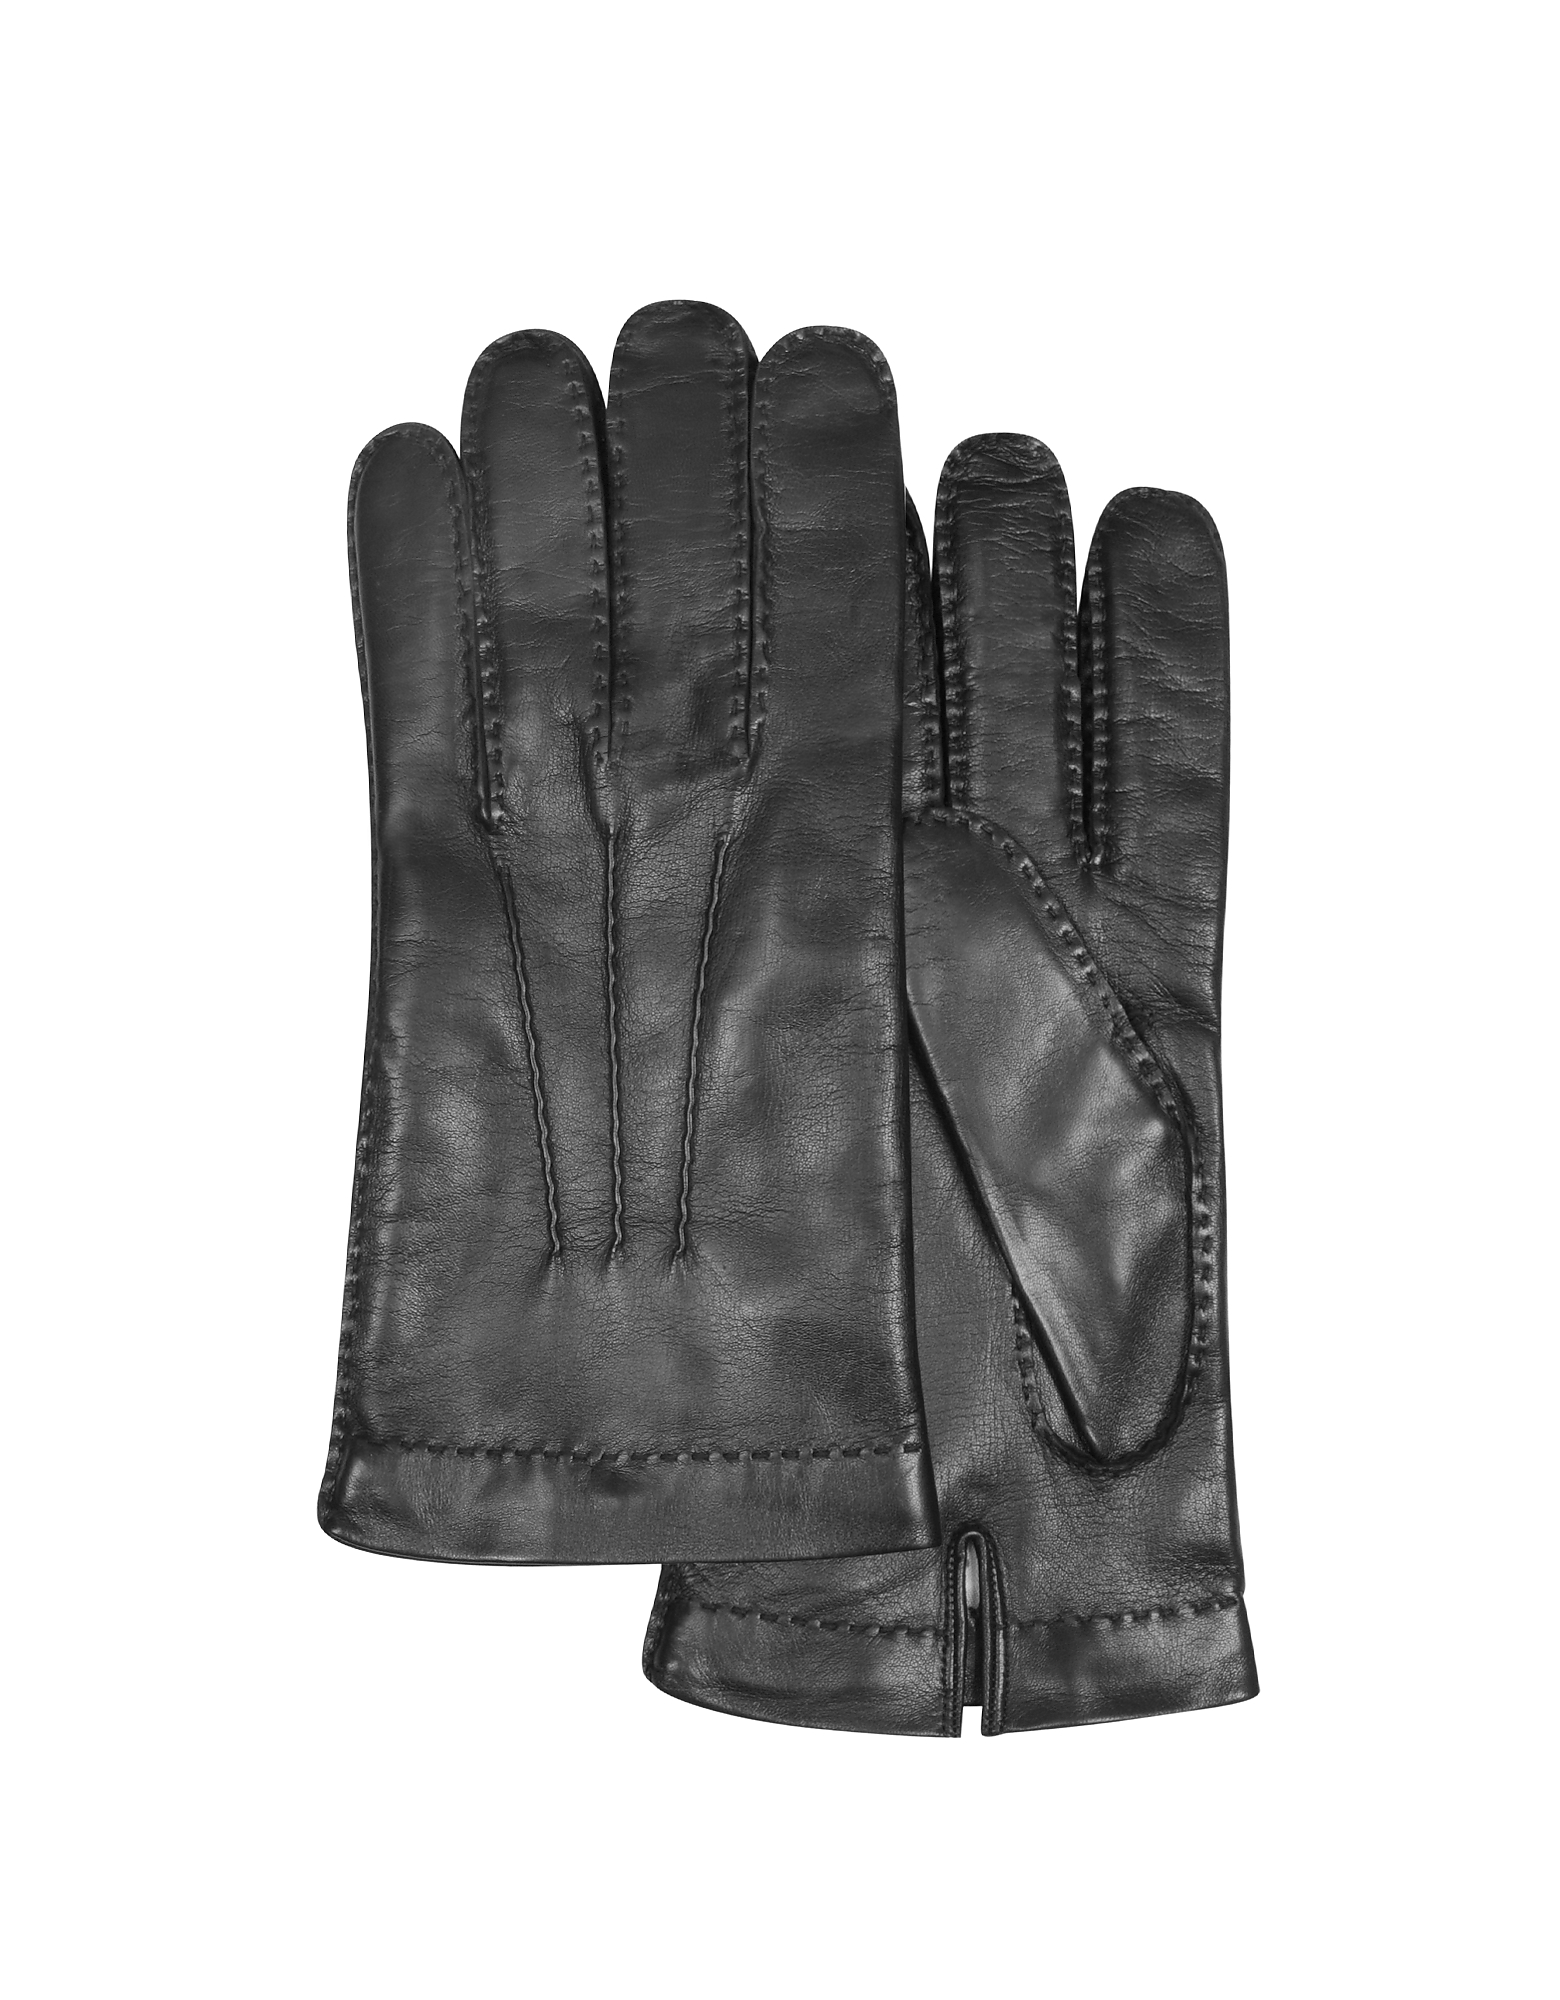 Forzieri Men's Gloves Men's Cashmere Lined Black Italian Leather Gloves